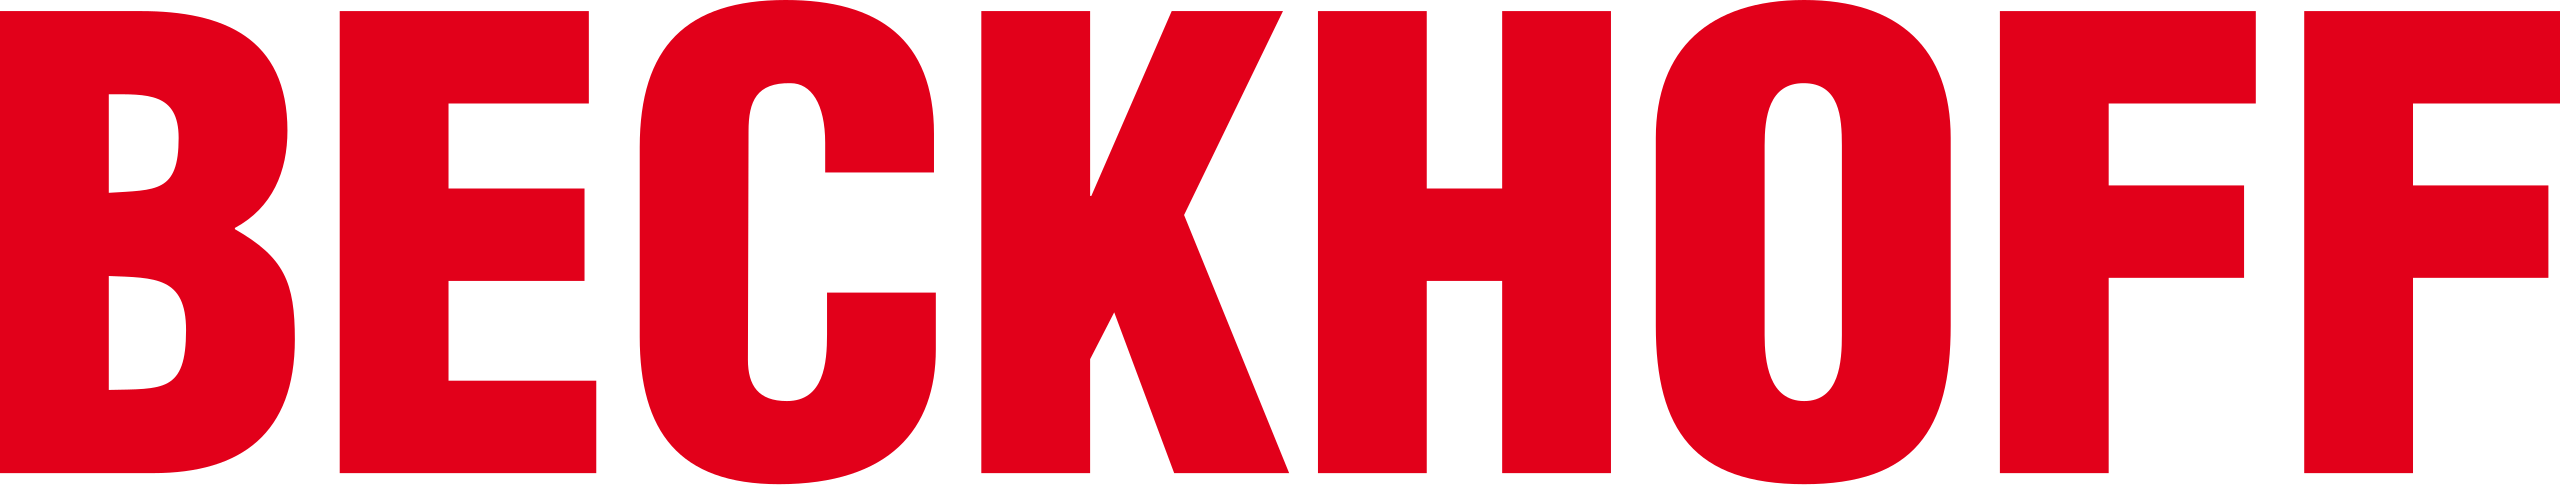 Logo de l'entreprise BECKHOFF